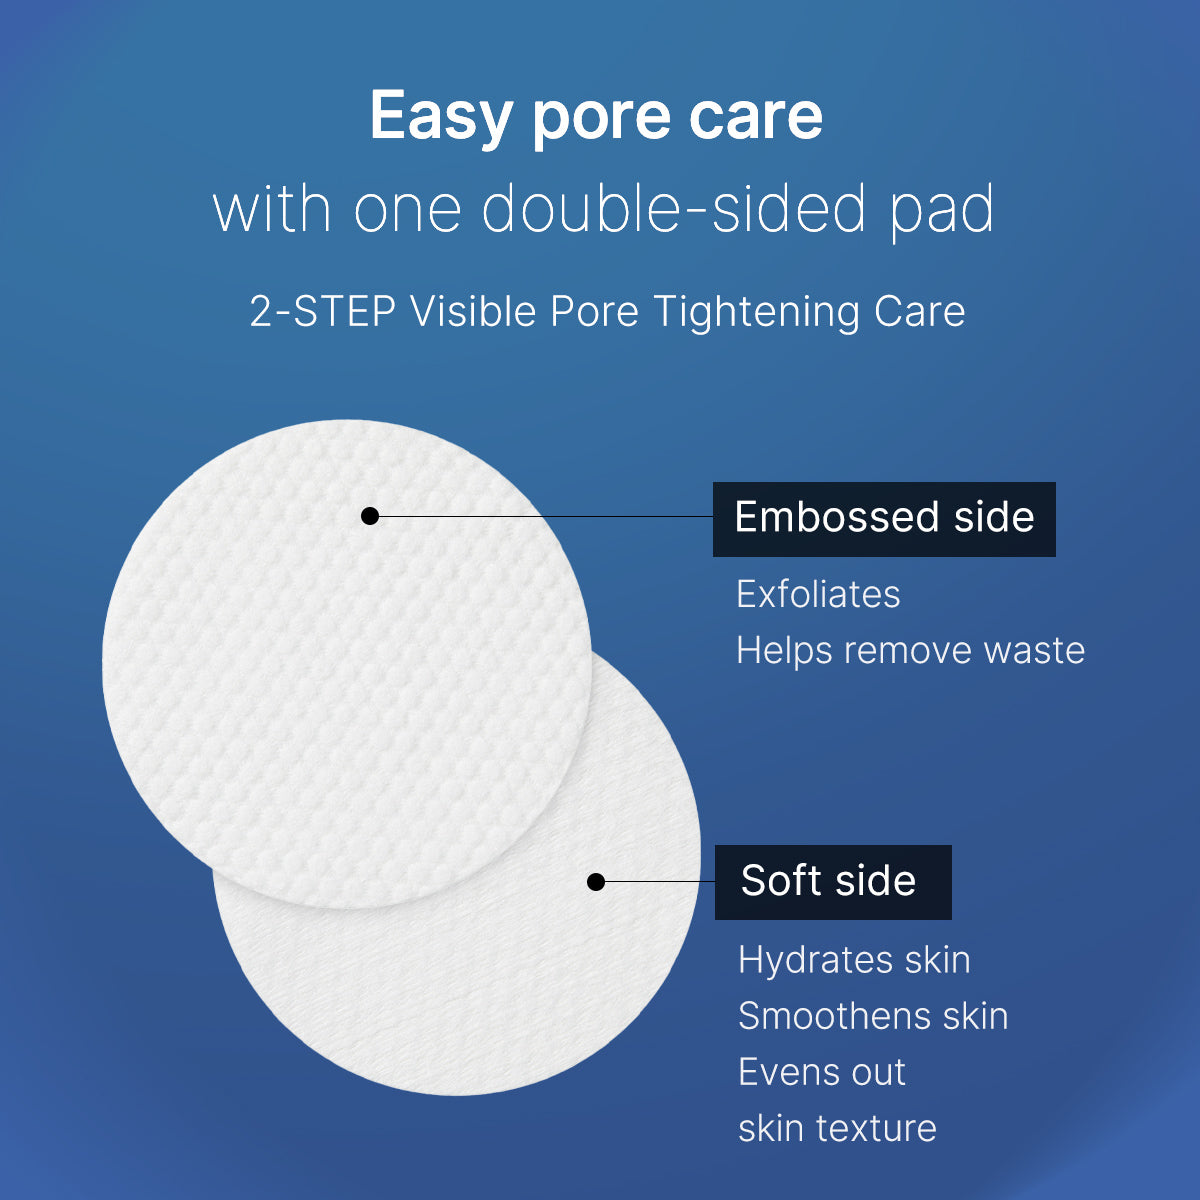 Medicube Zero Pore Pads 2.0 - Dual-Textured Facial Toner Pads for  Exfoliation and Minimizing Pores with 4.5% AHA Lactic Acid & 0.45% BHA  Salicylic